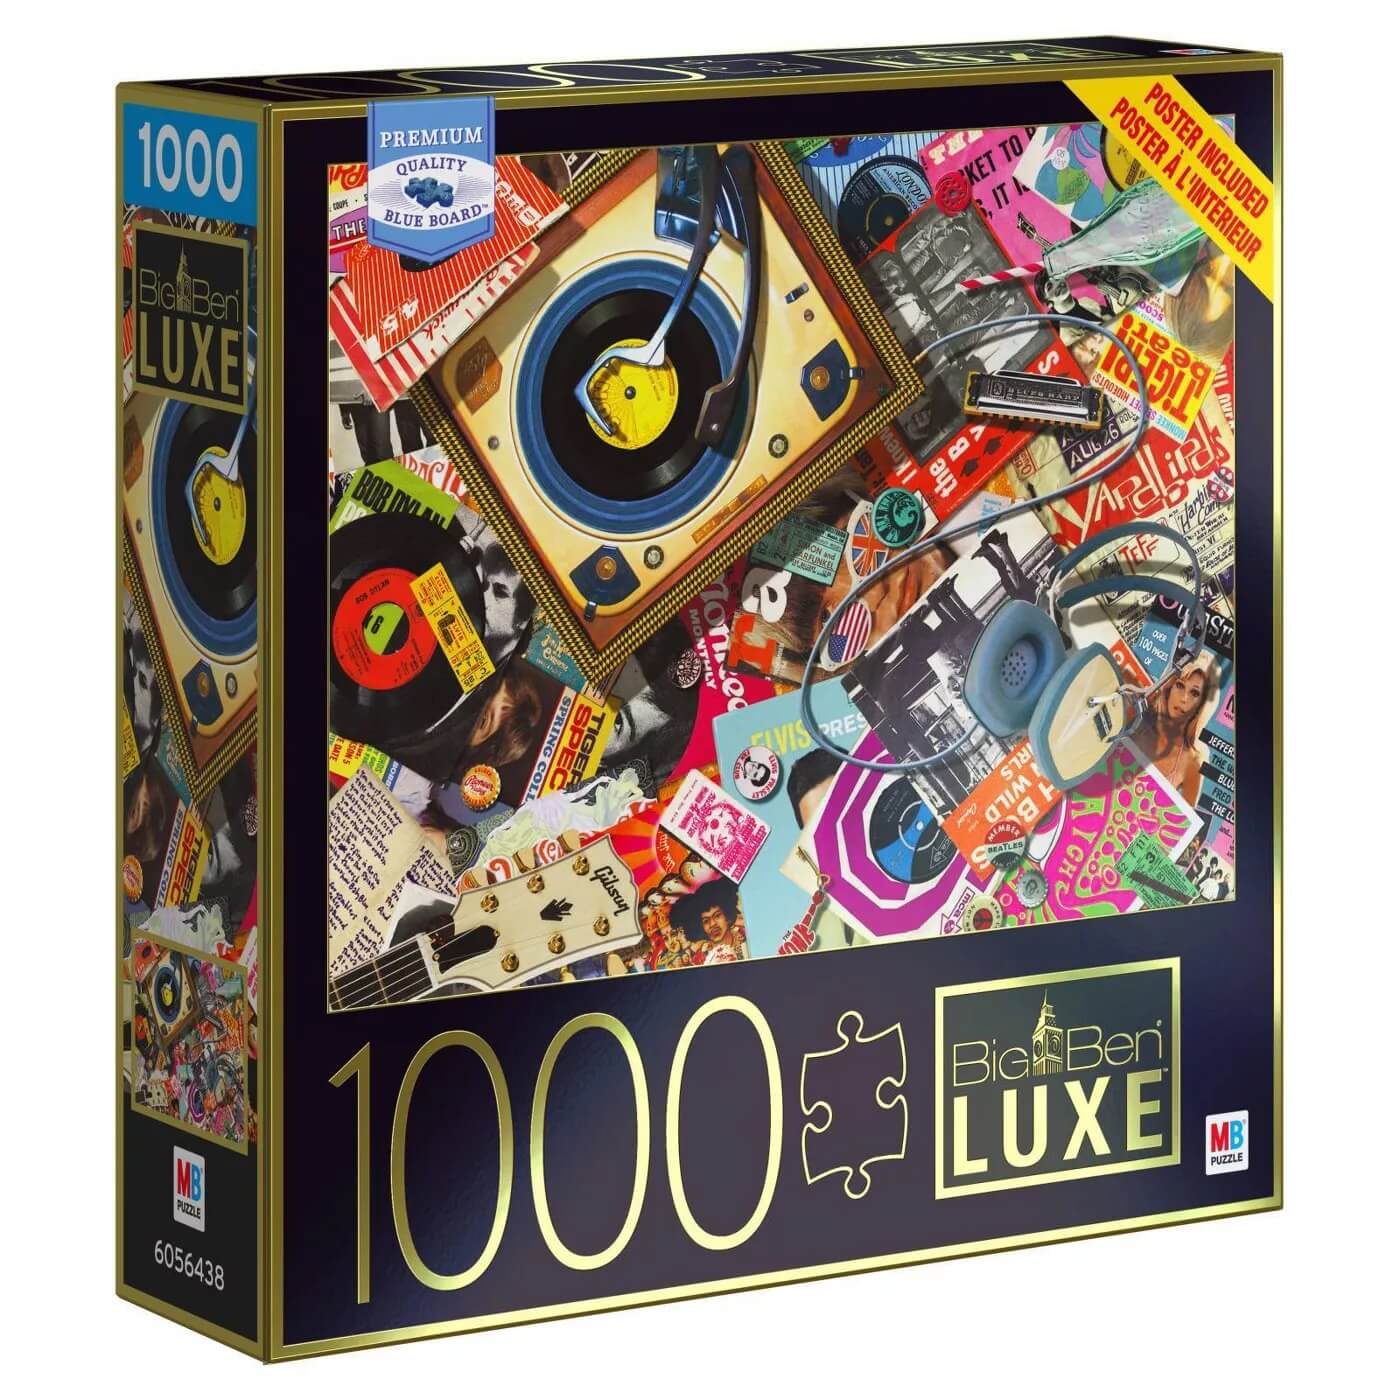 Cardinal Big Ben Luxe 1960s 1000 Piece Puzzle